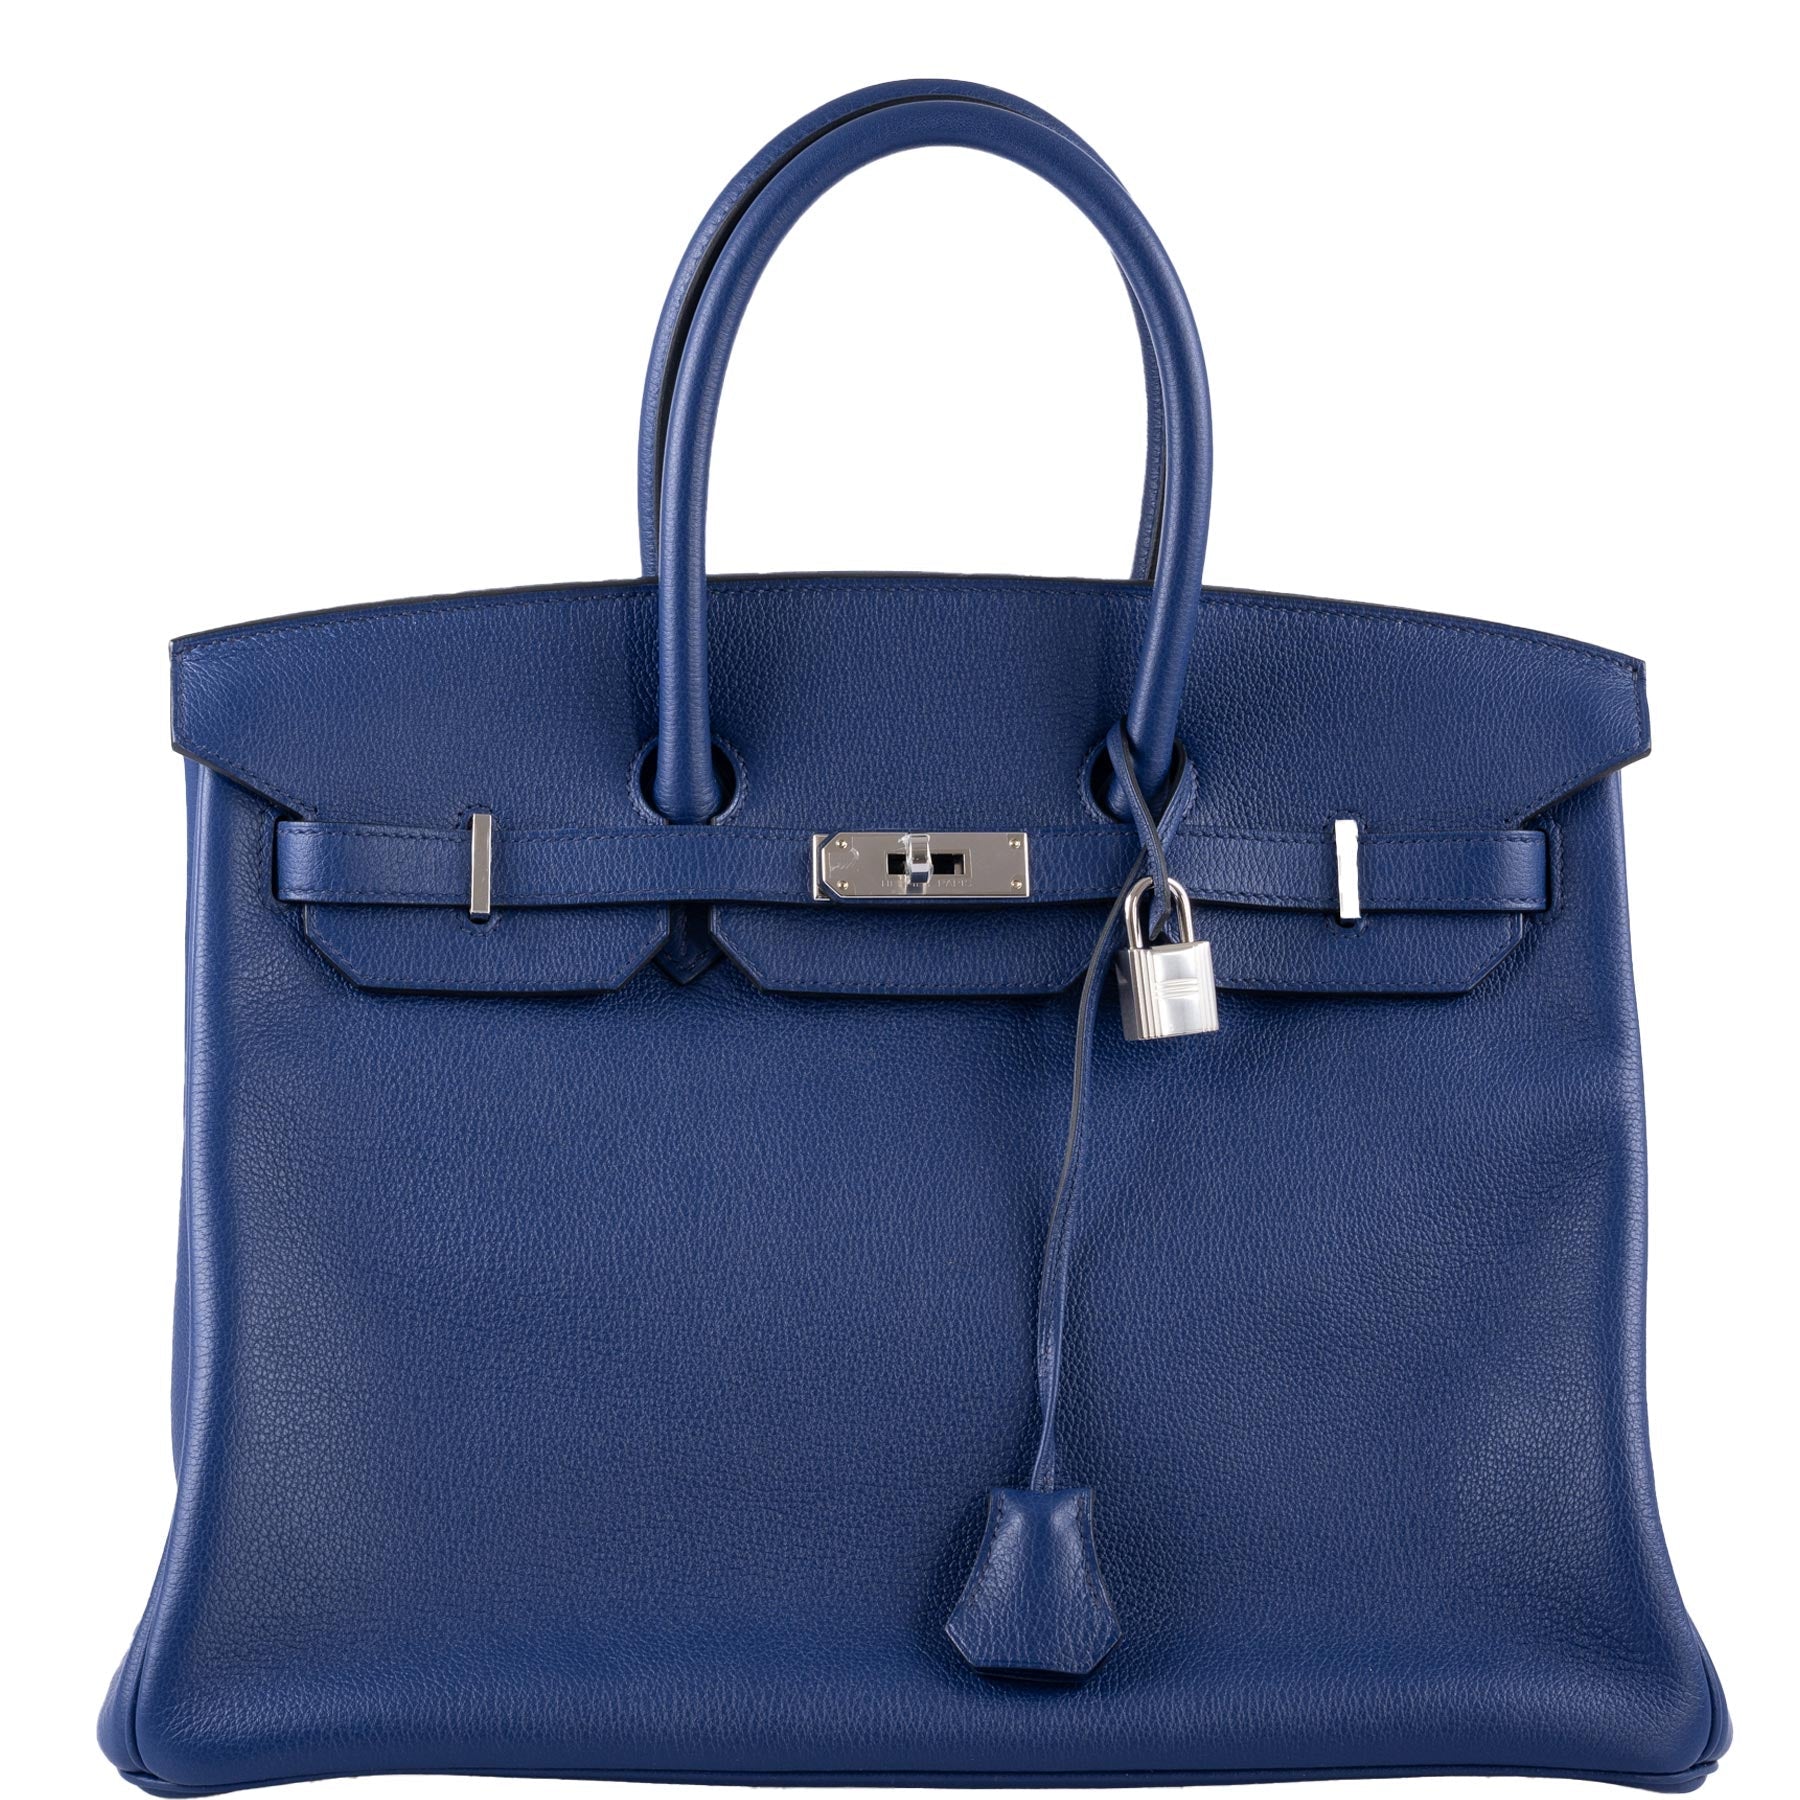 Hermès 2017 Birkin 35cm Taurillon Novillo Leather Bag